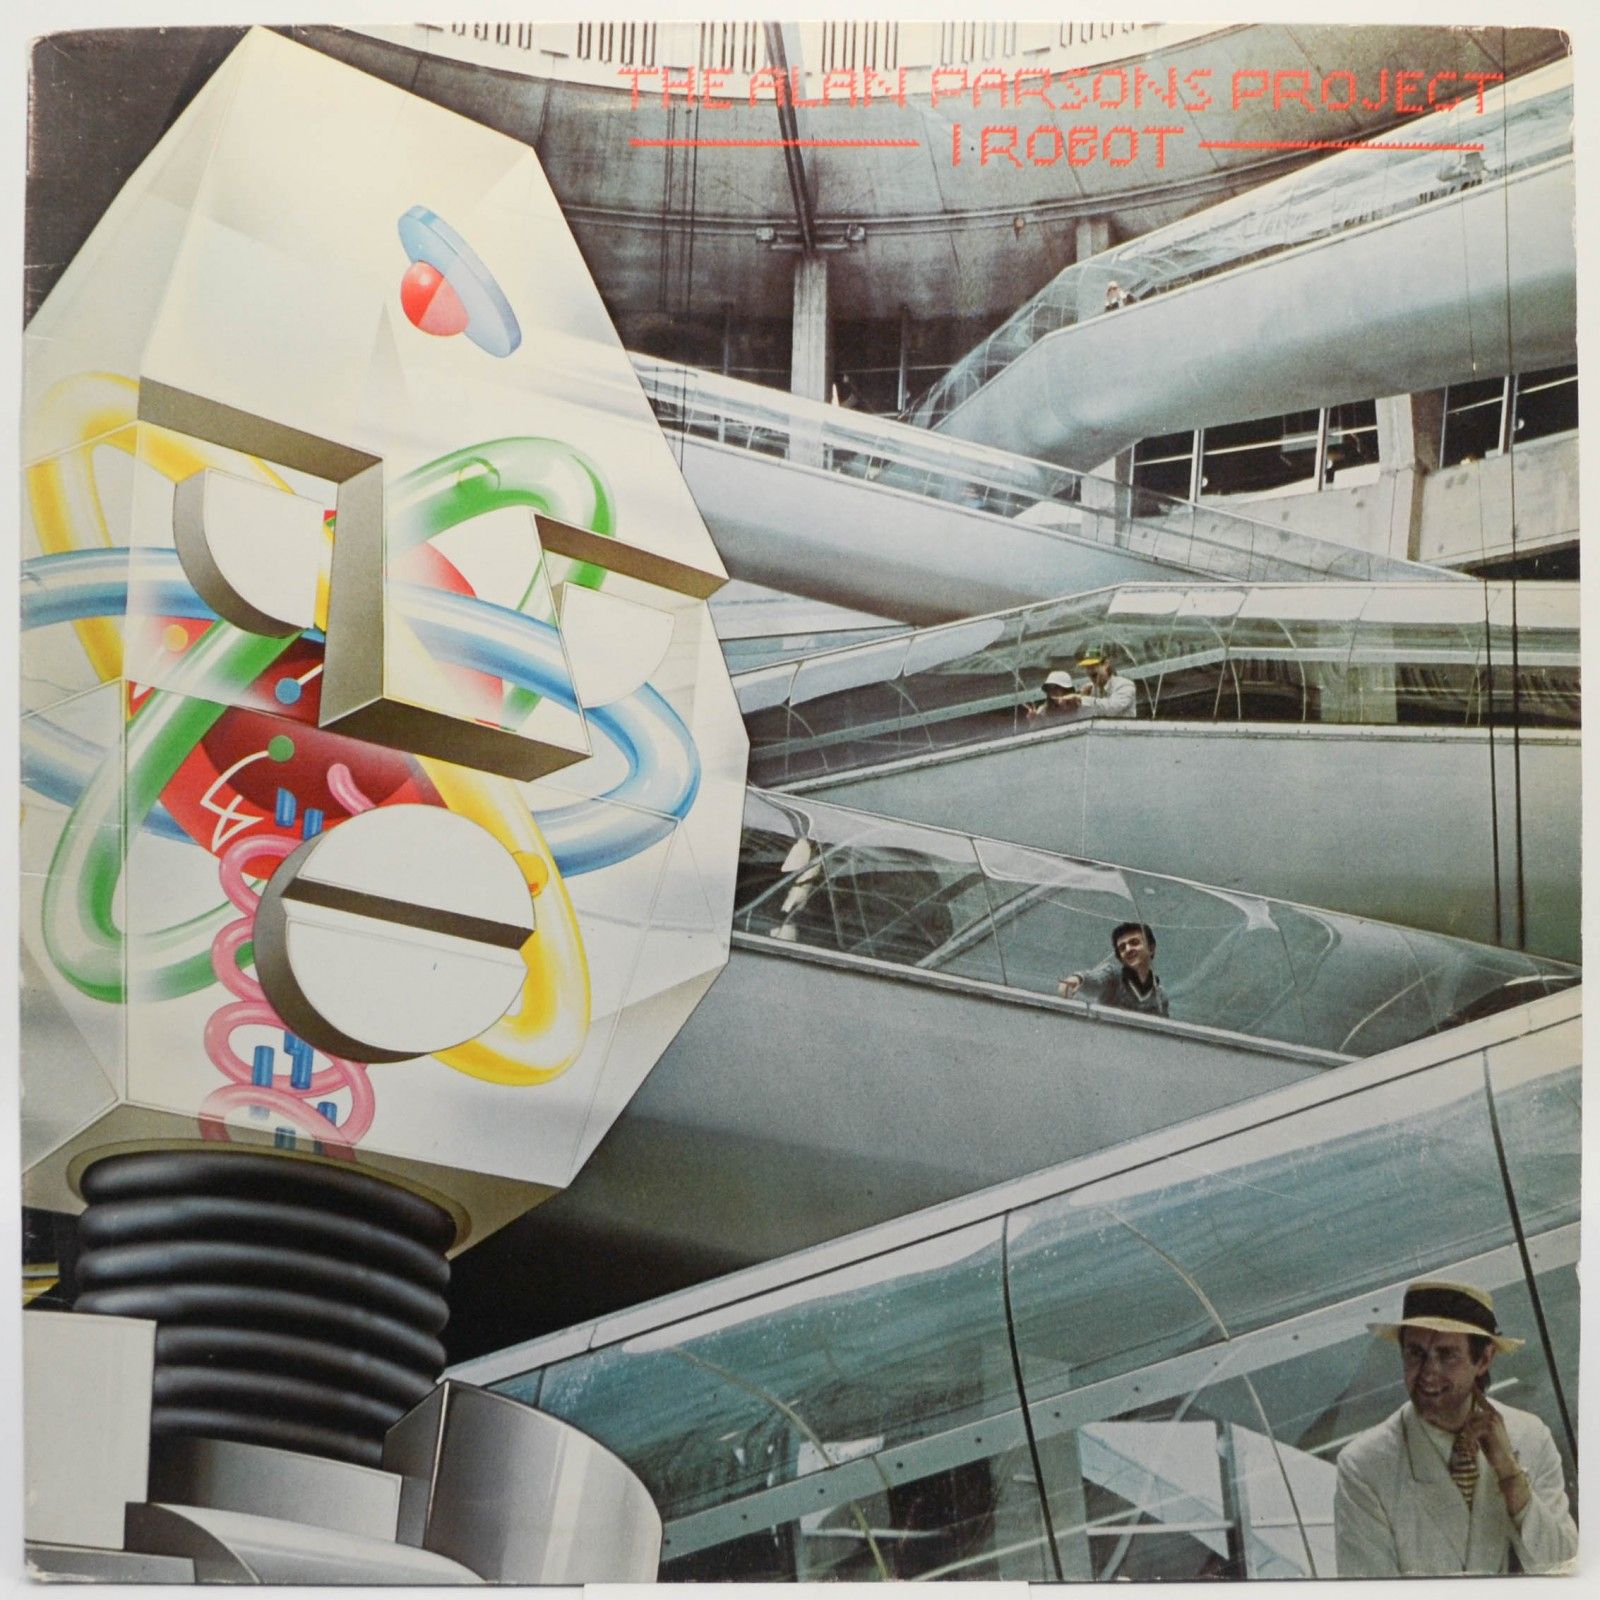 Alan Parsons Project — I Robot, 1977